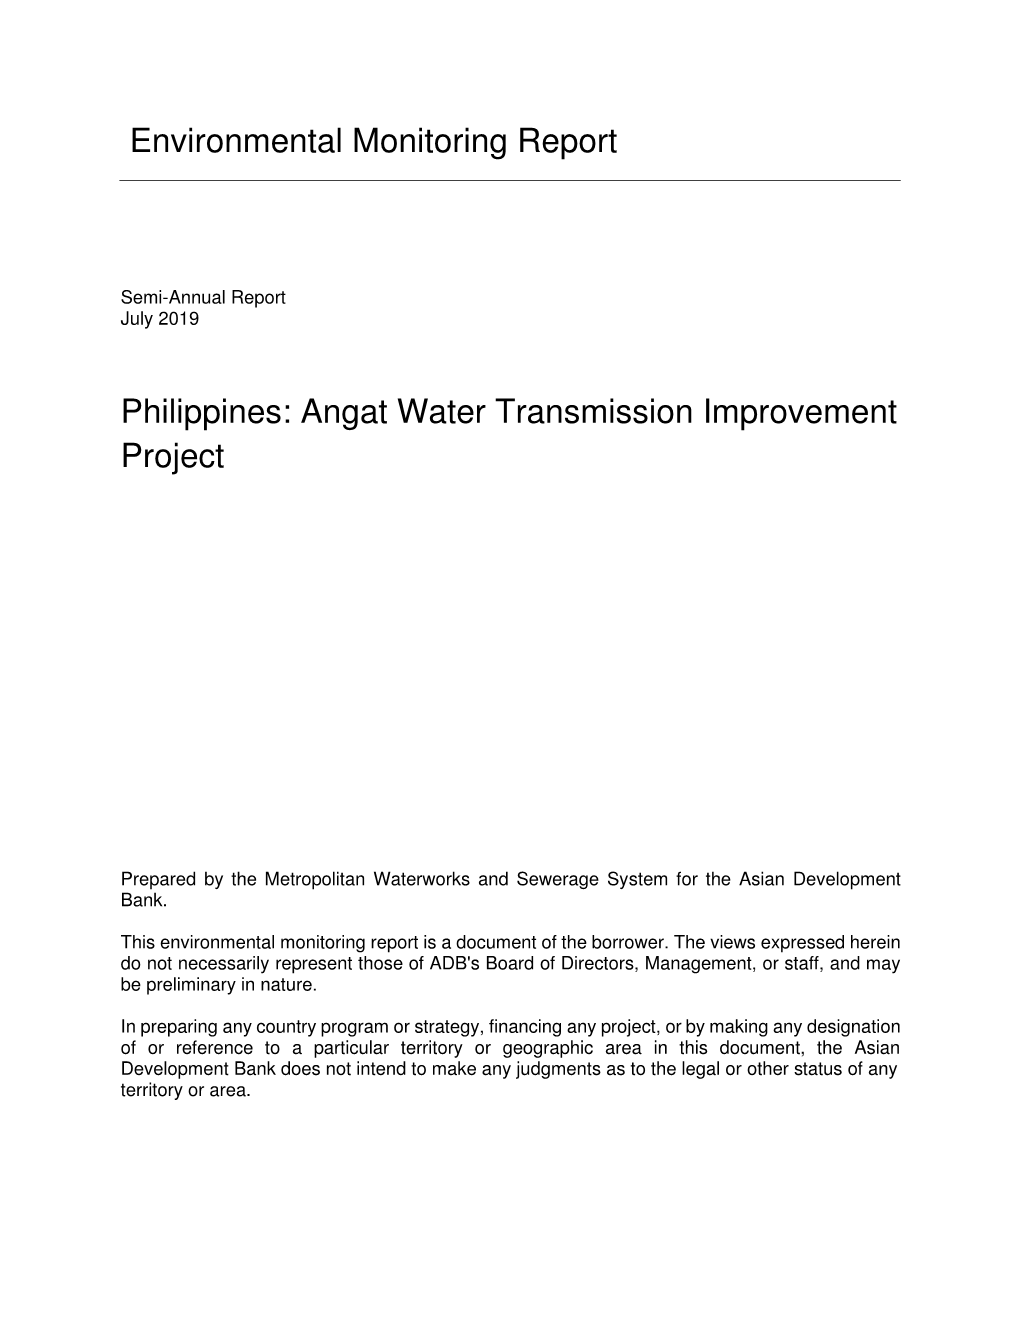 46362-002: Angat Water Transmission Improvement Project